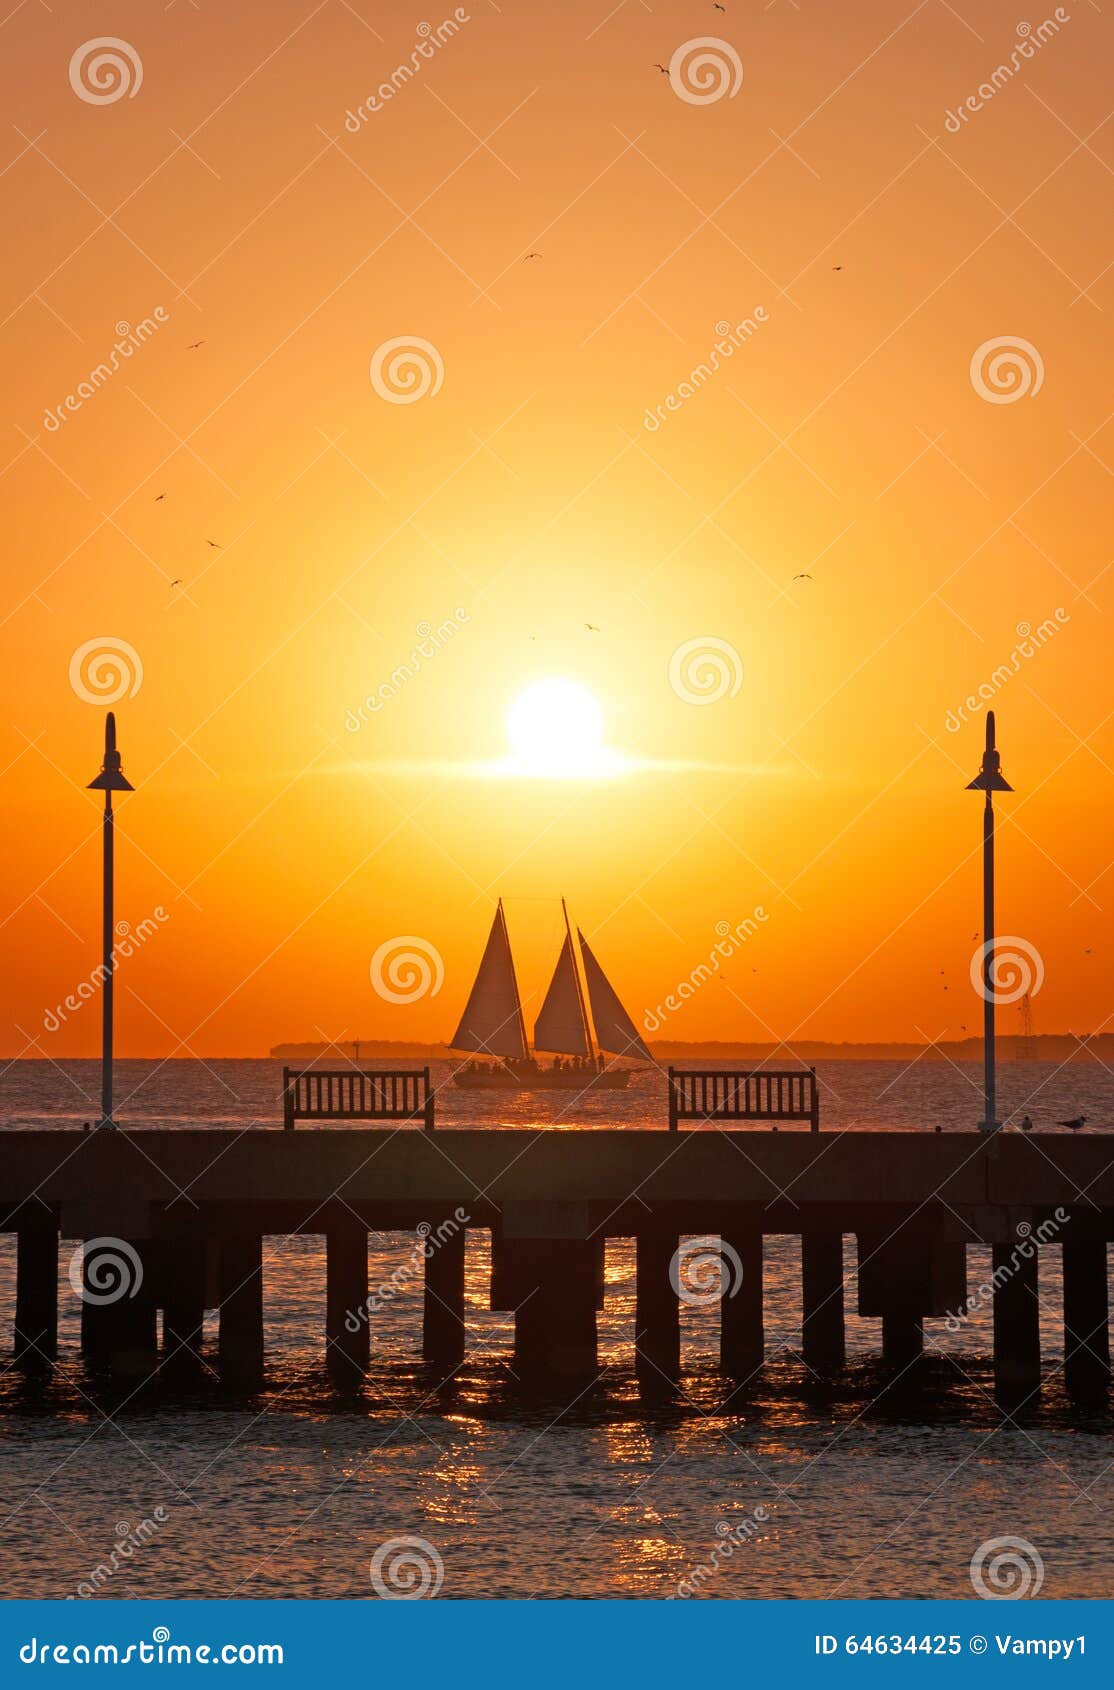 sunset, pier, sea, sailboat, benches, key west, keys, cayo hueso, monroe county, island, florida